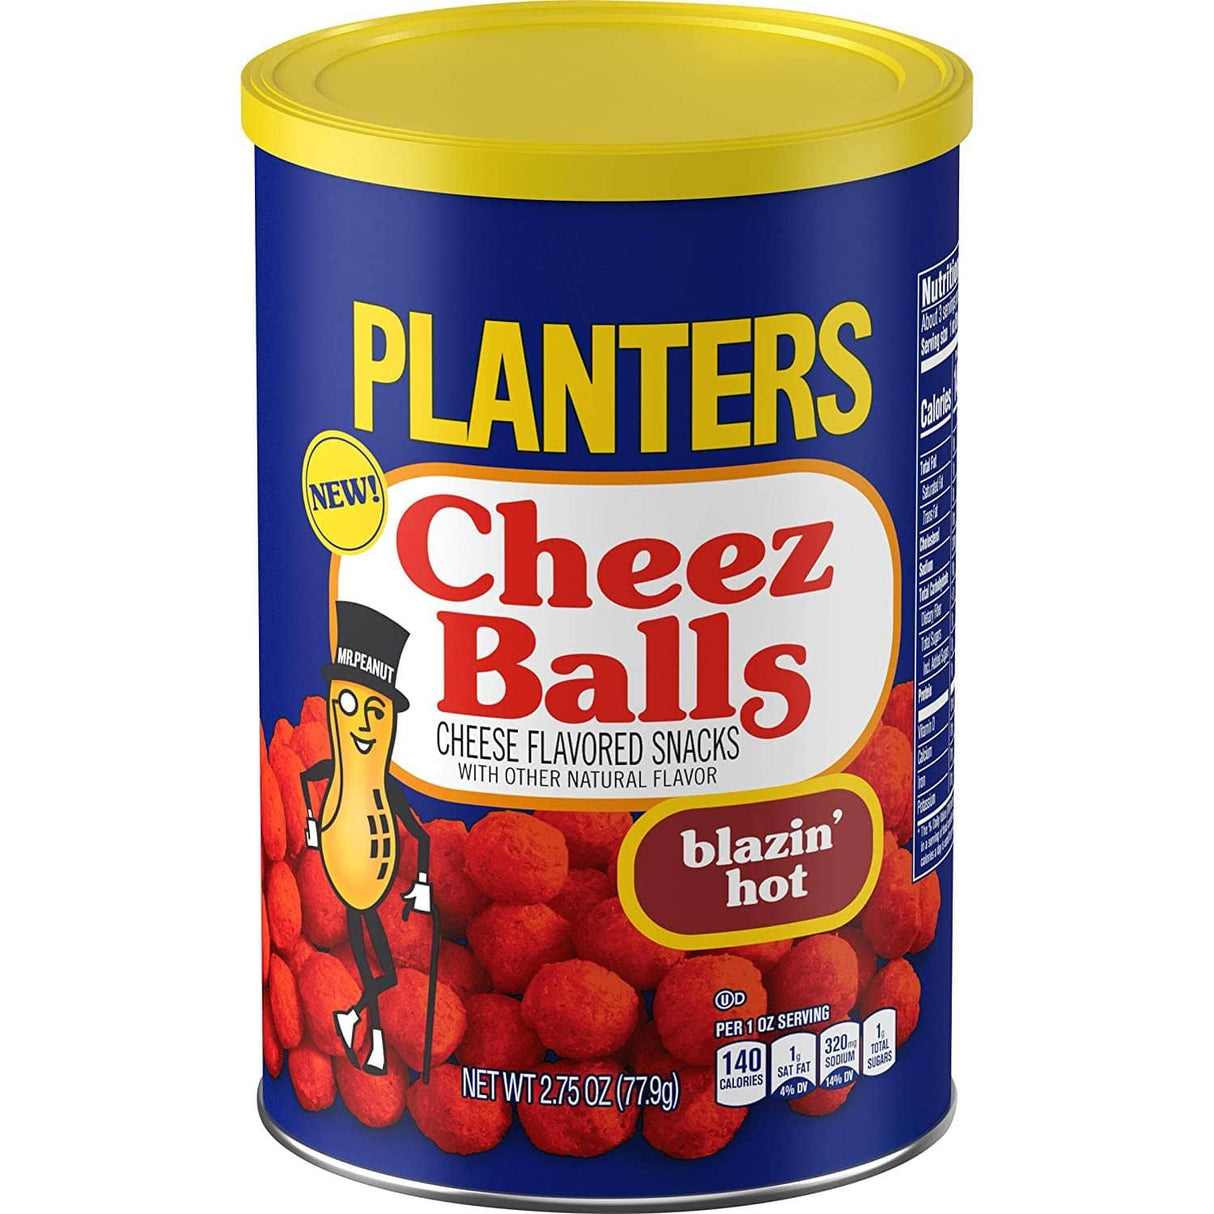 Planters Cheez Balls Blazin' Hot (78g)